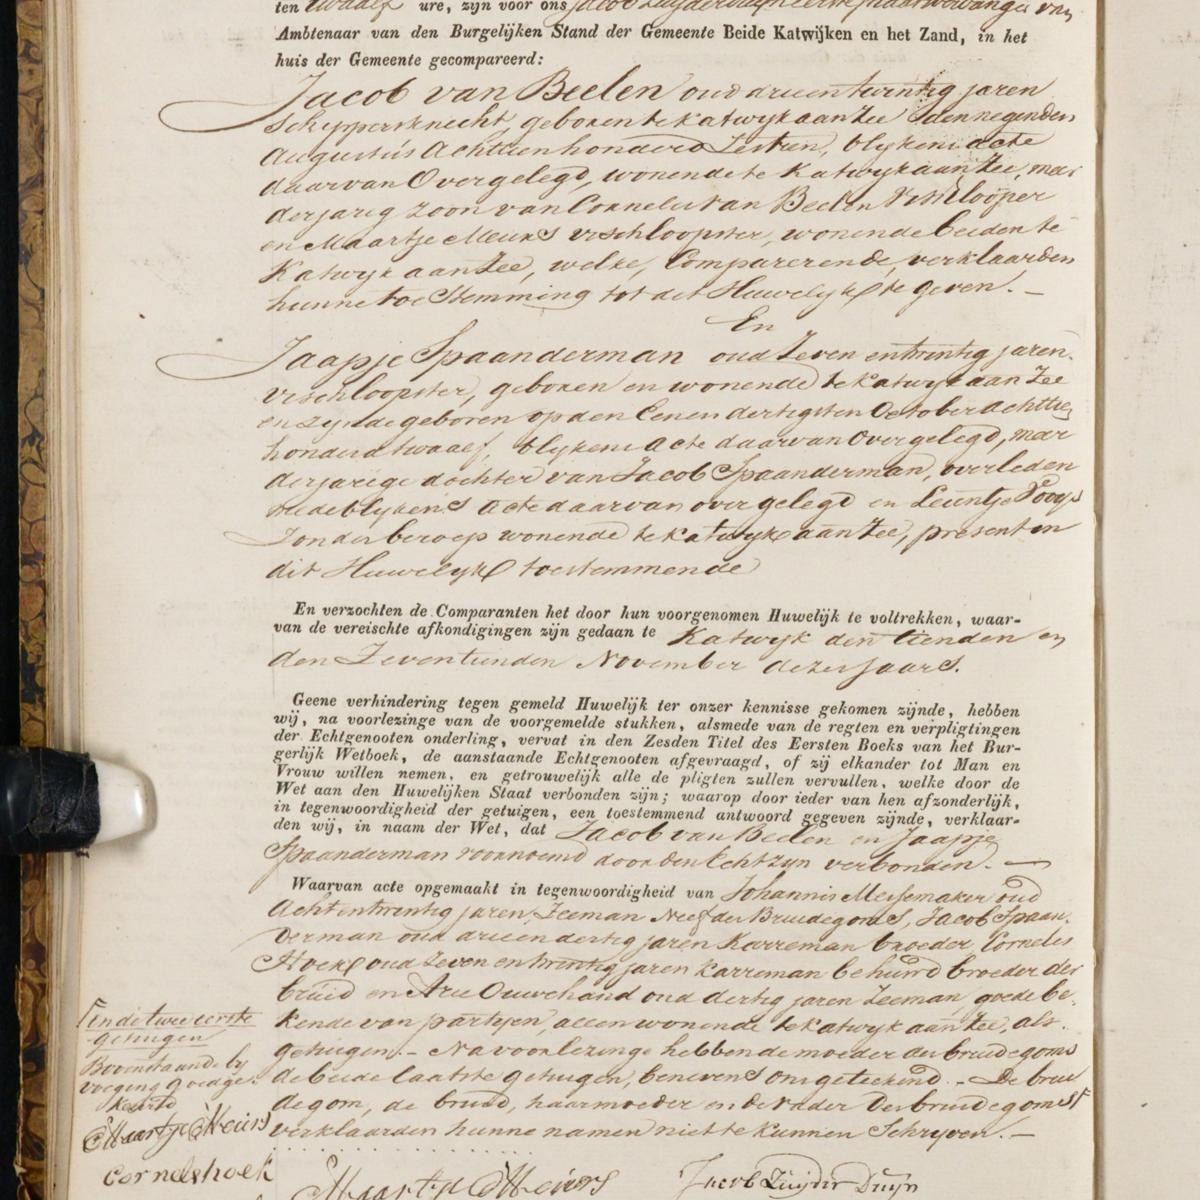 Civil registry of marriages, Katwijk, 1839, record 32